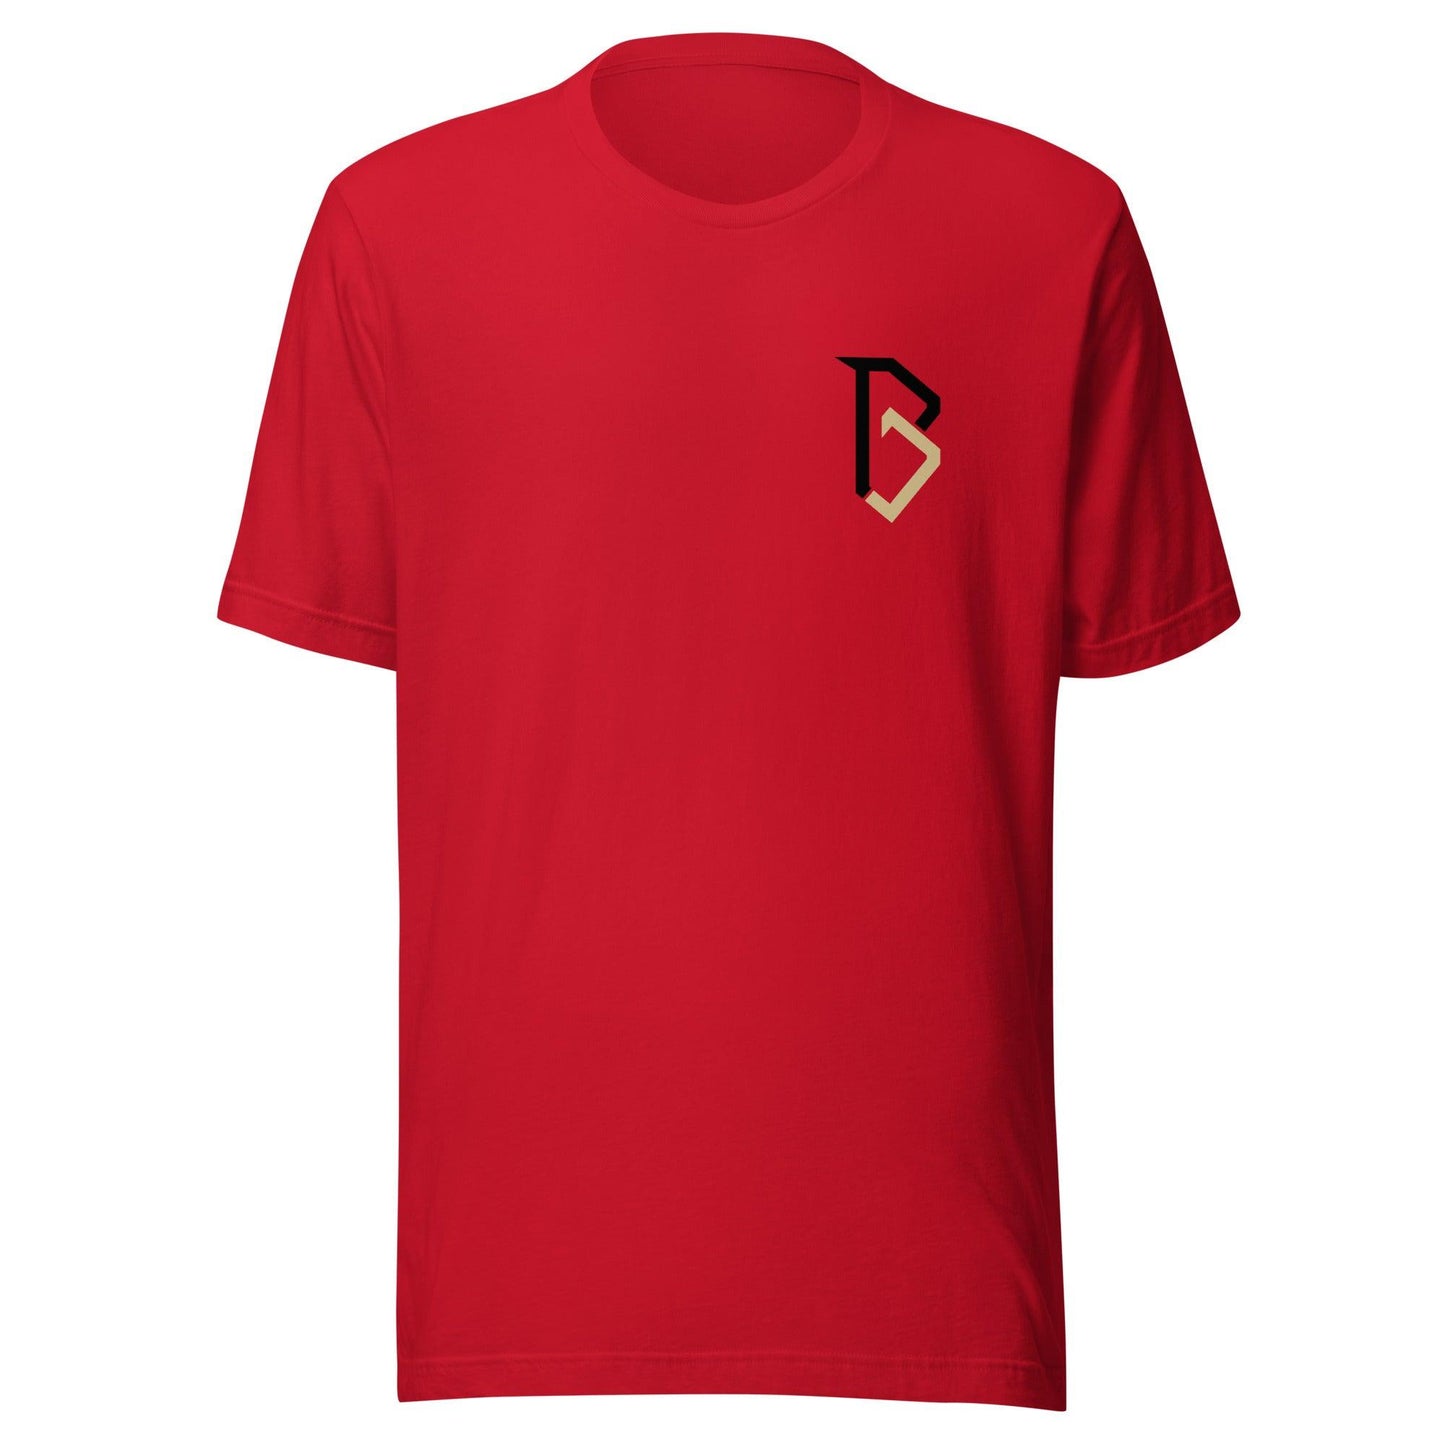 BJ Diakite "Essential" t-shirt - Fan Arch